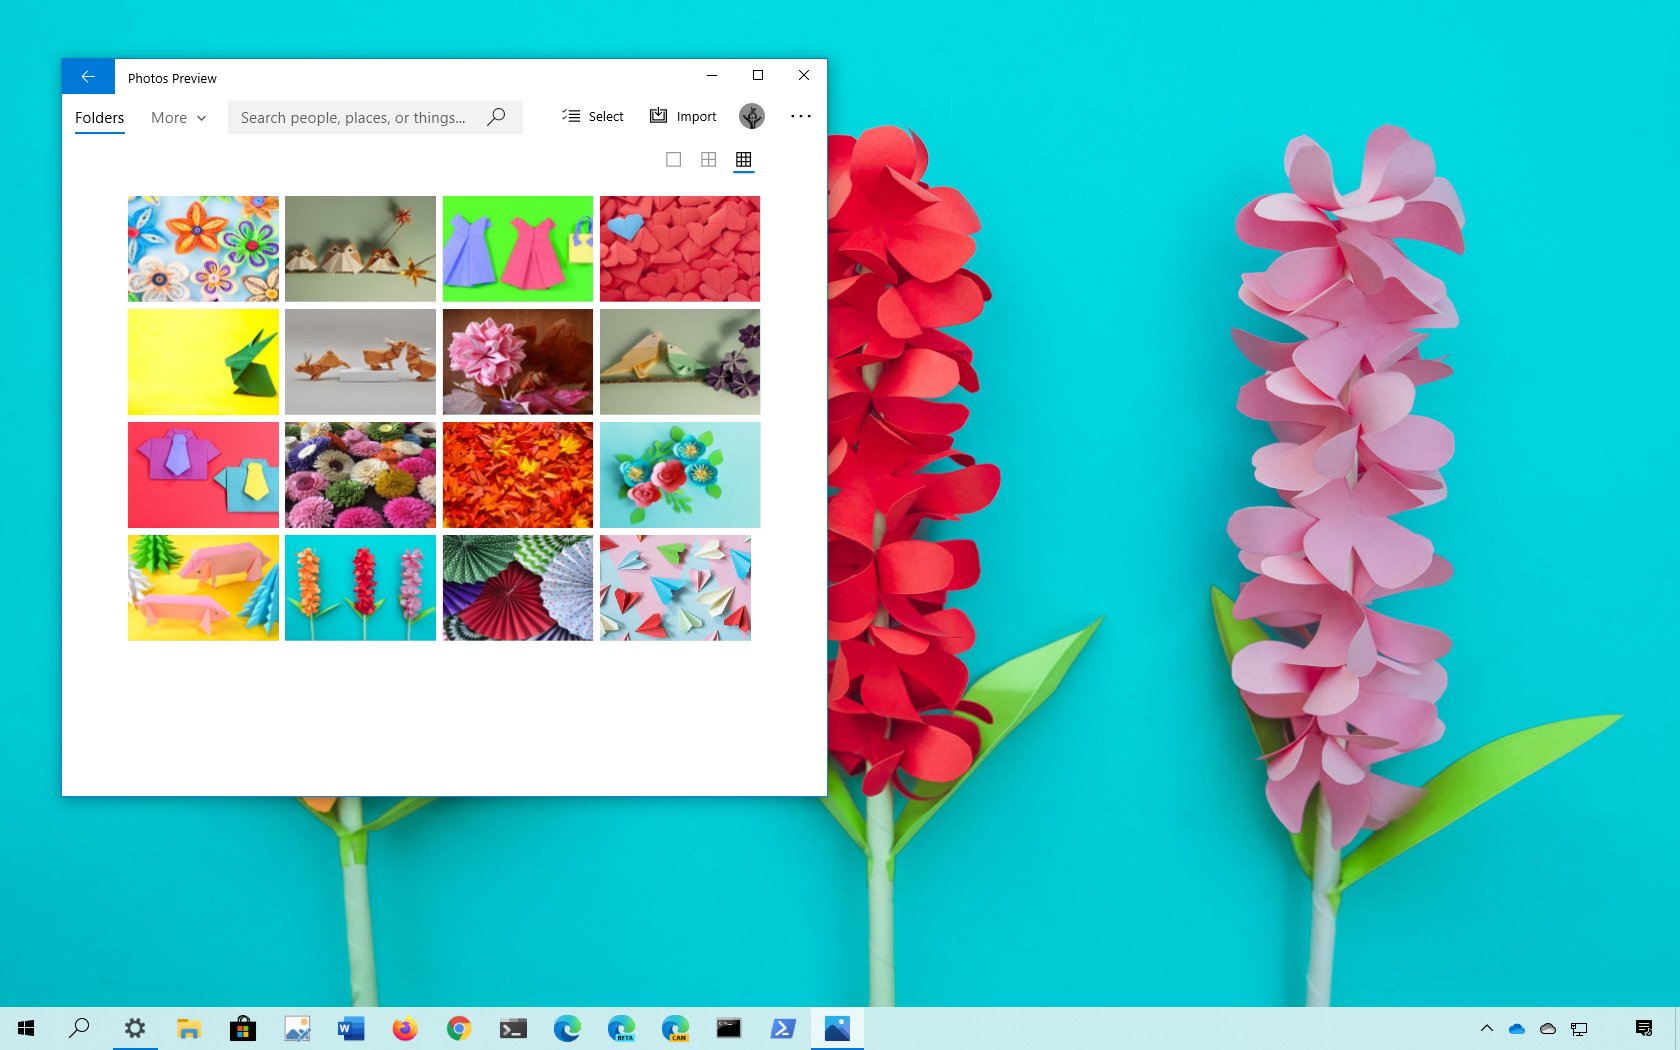 Paper Art theme for Windows 10 (download) - Pureinfotech